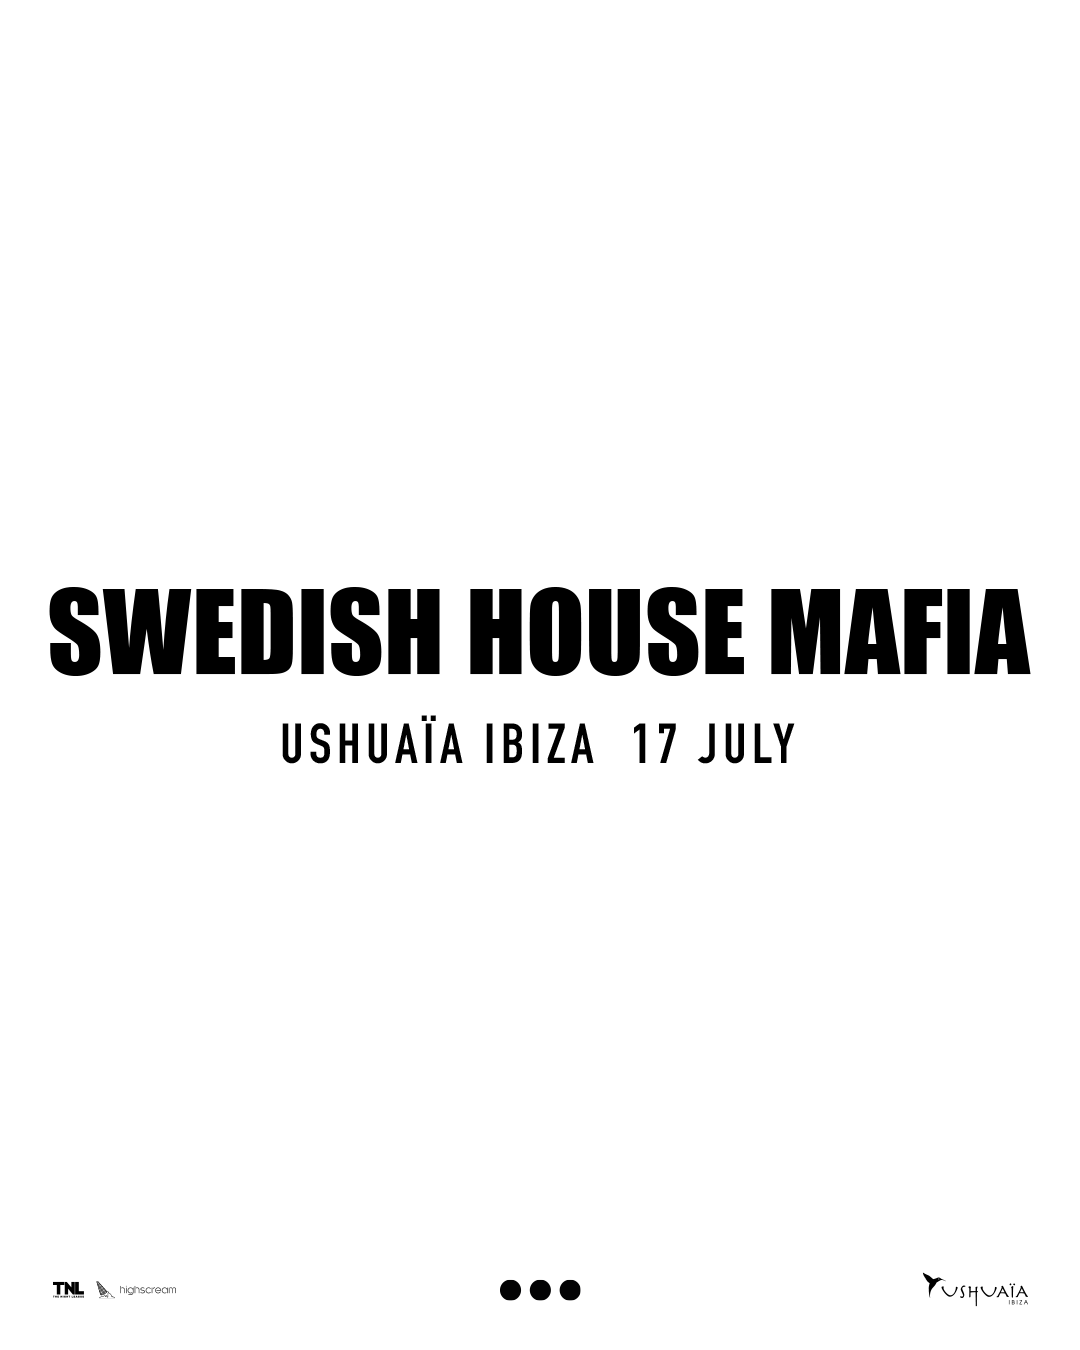 Breaking news Ushuaïa announces the Swedish House Mafia!